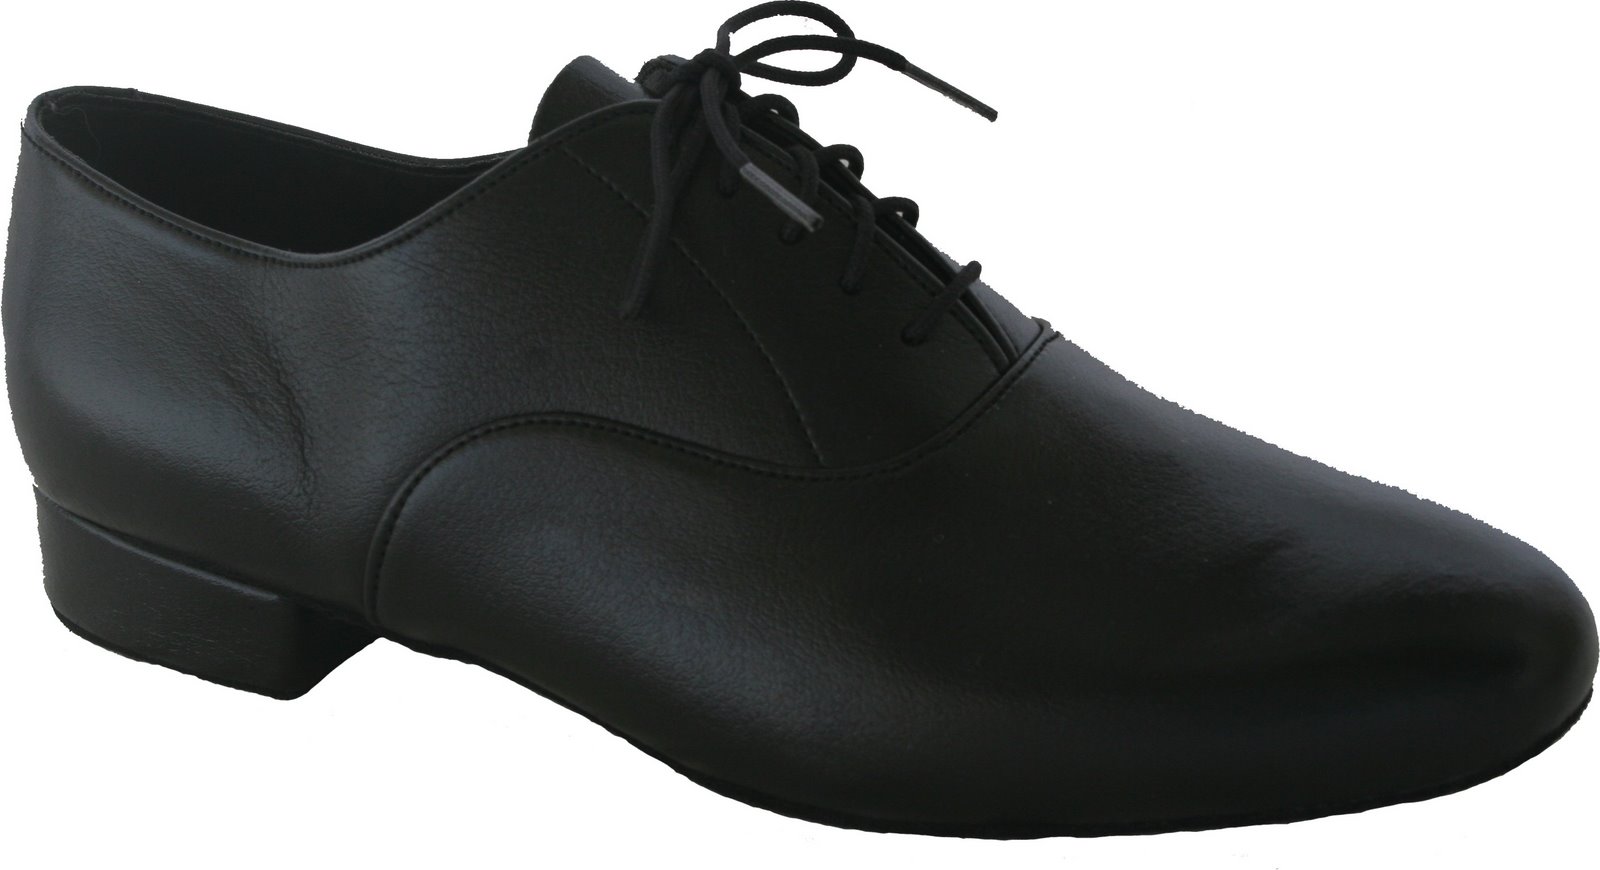 Mens Vegan Oxford Dance Shoes - Black